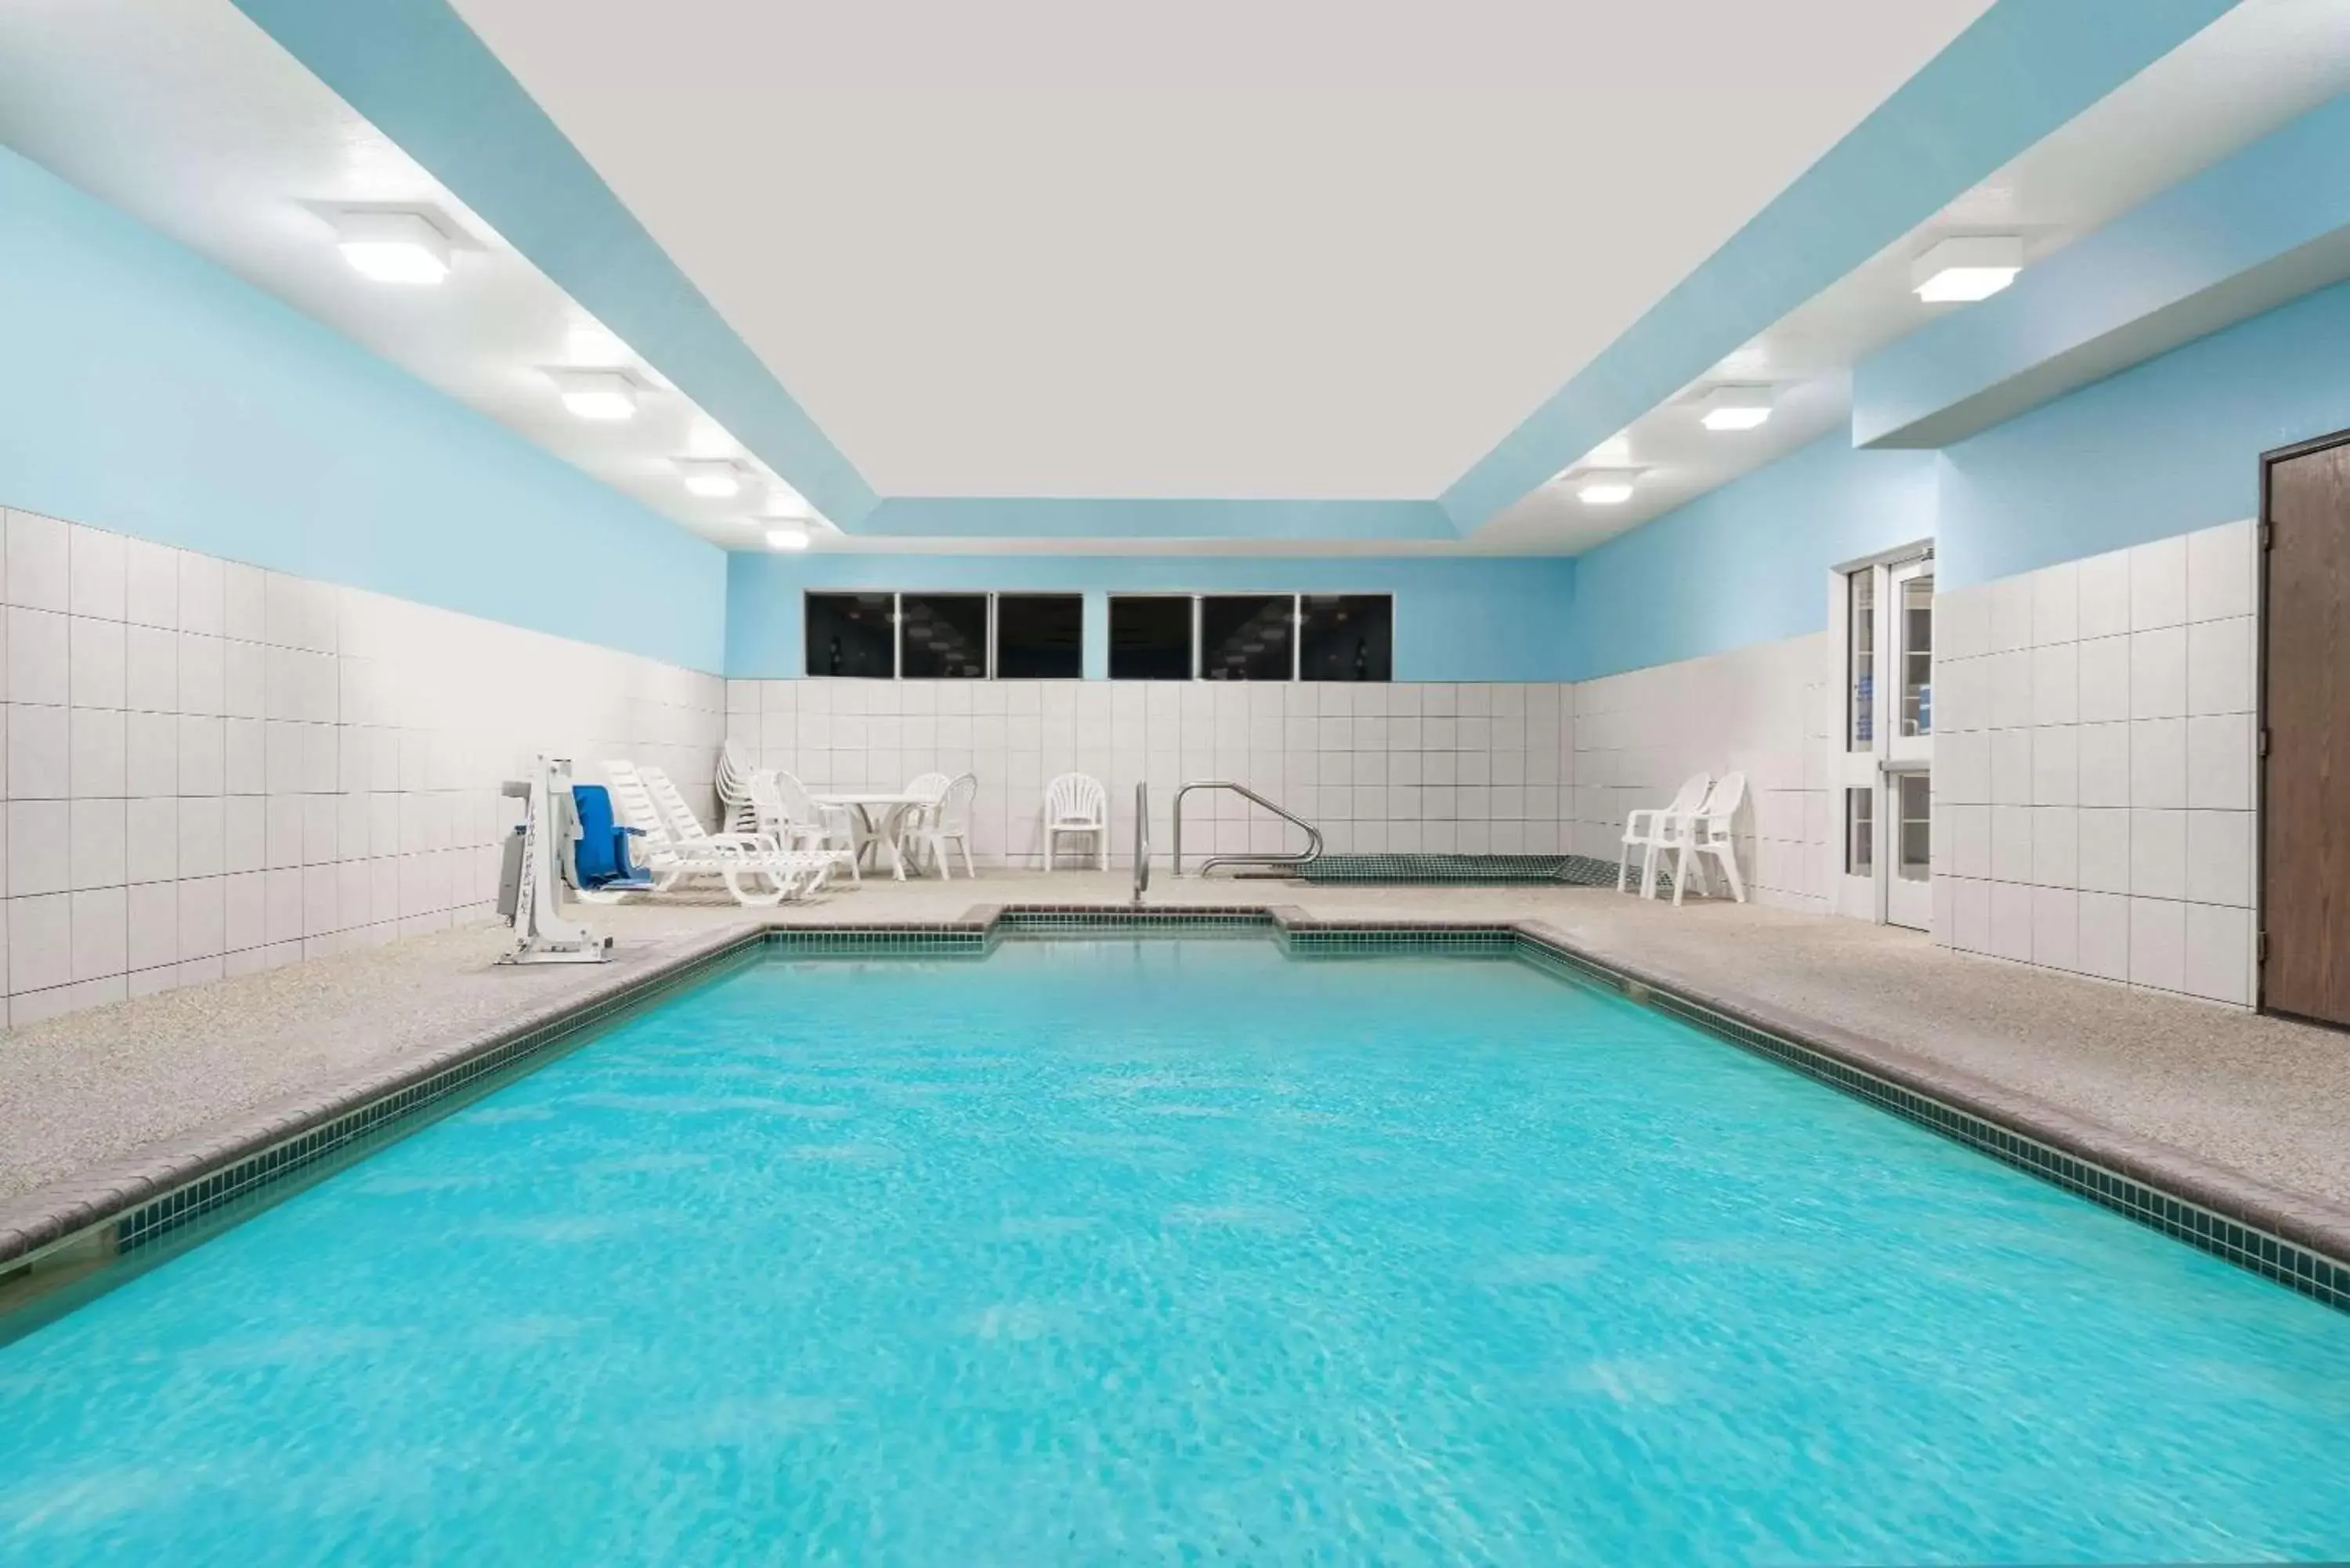 On site, Swimming Pool in Microtel Inn & Suites by Wyndham New Ulm